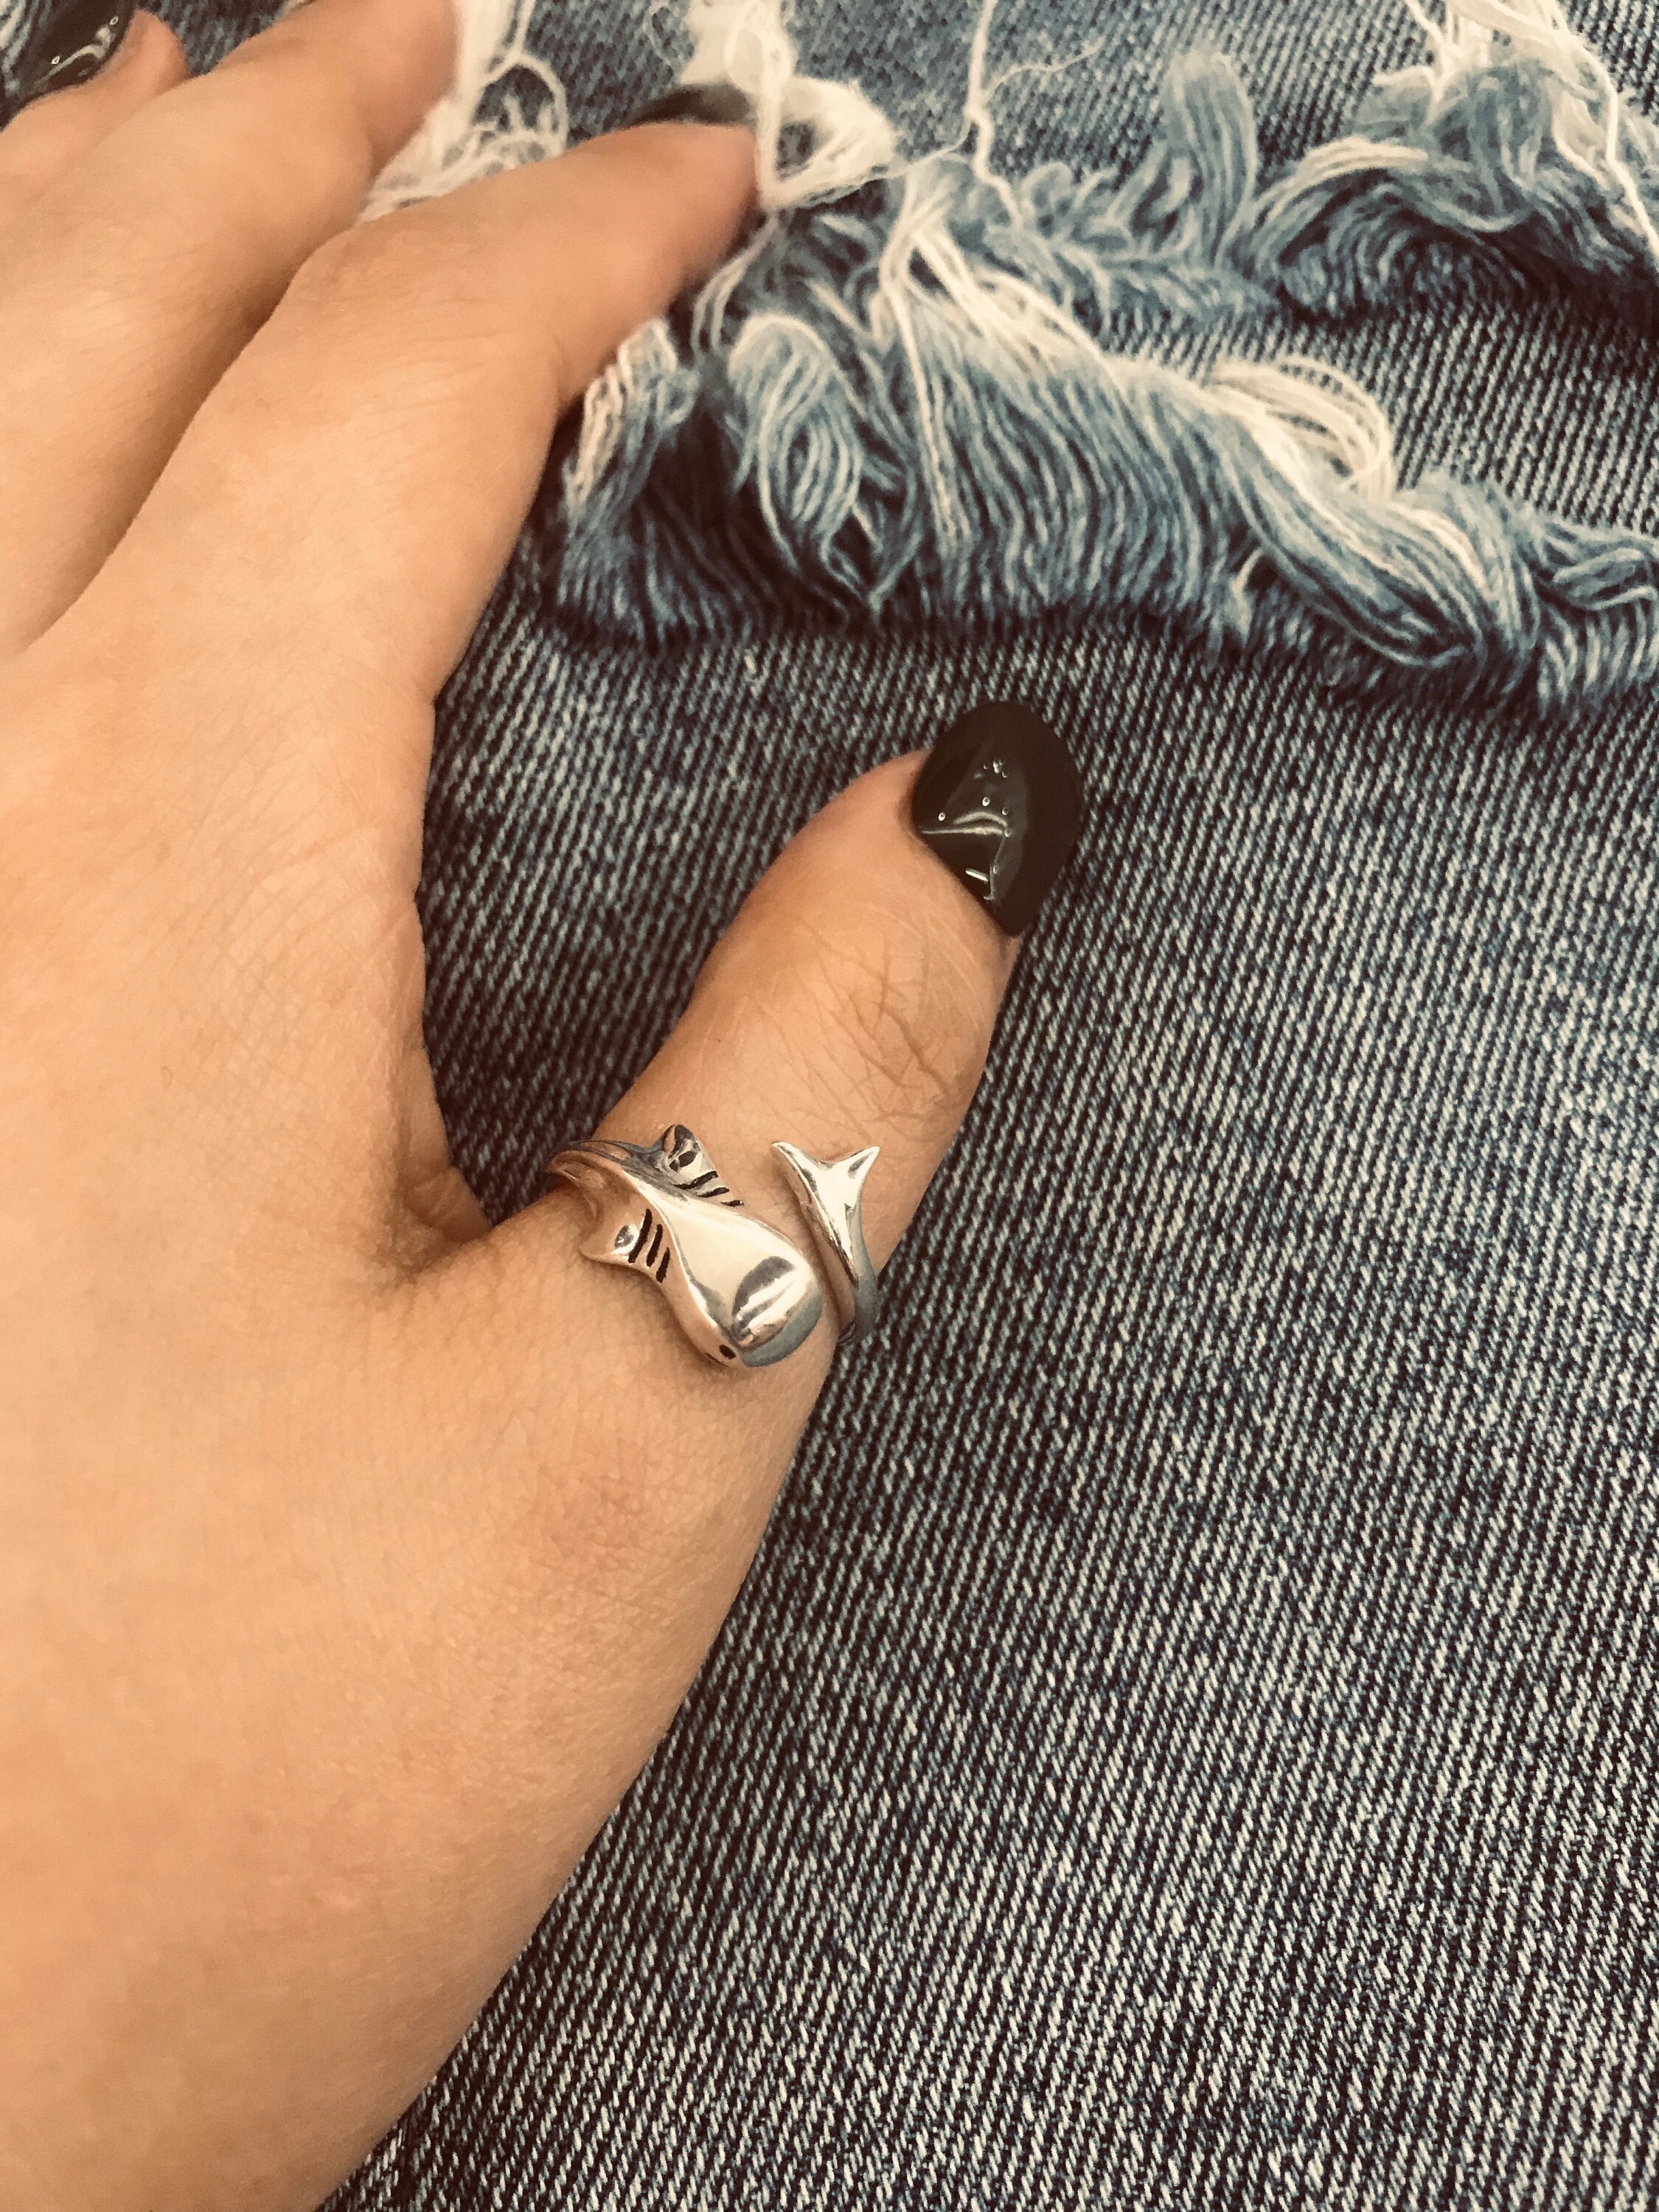 Stainless Steel Shark Shaped Openwork Ring, Fashionable Adjustable Finger  Ring